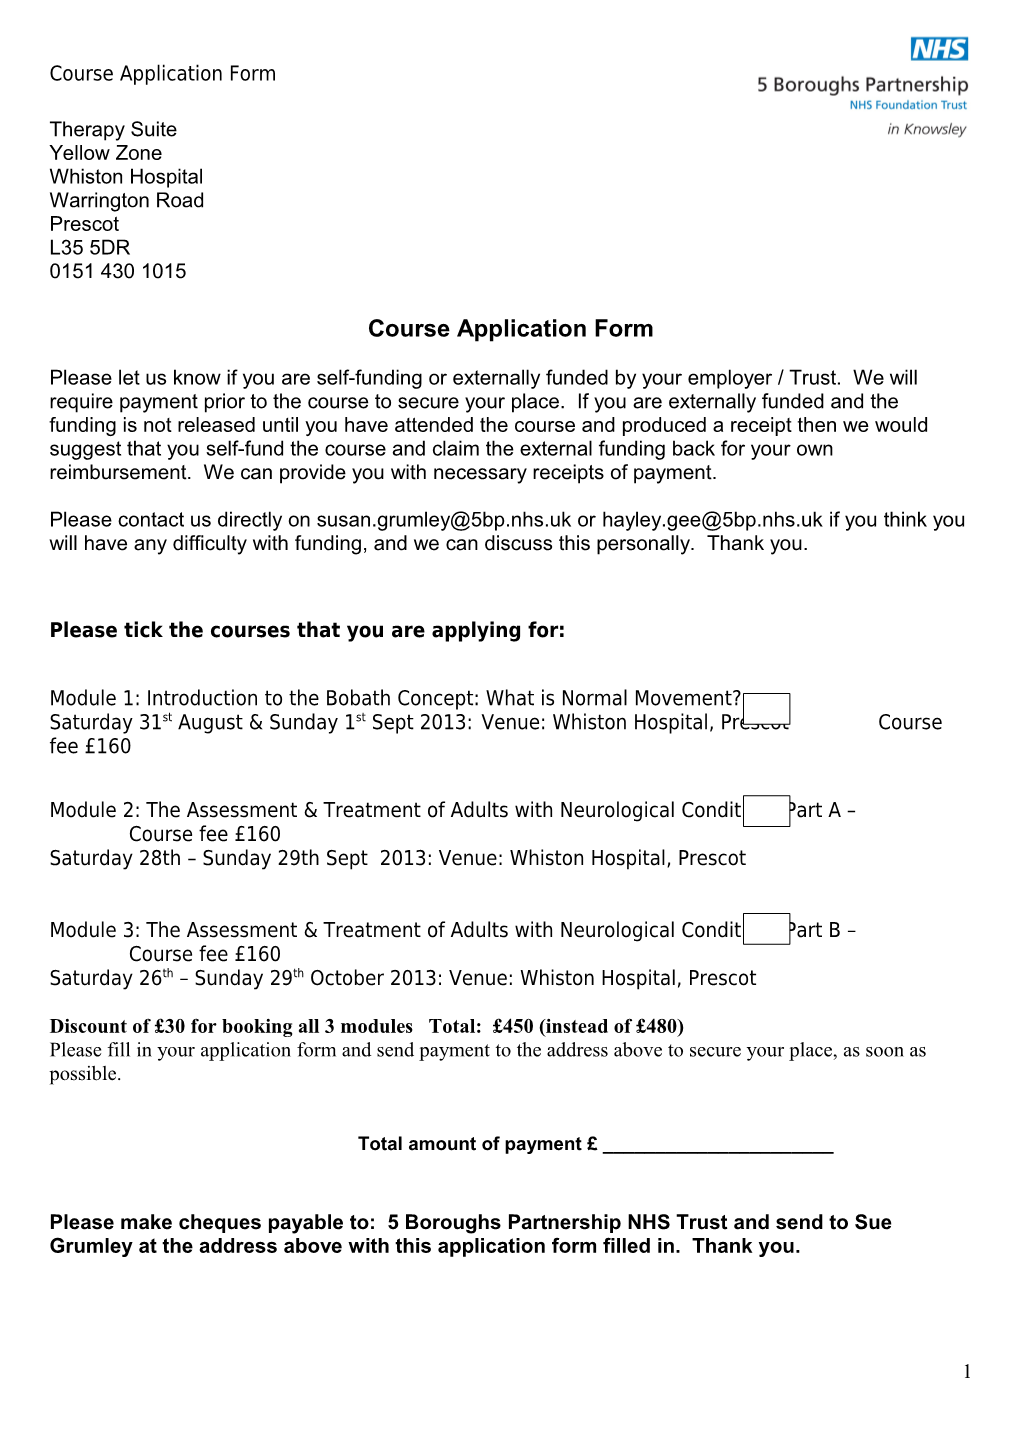 Course Application Form s1